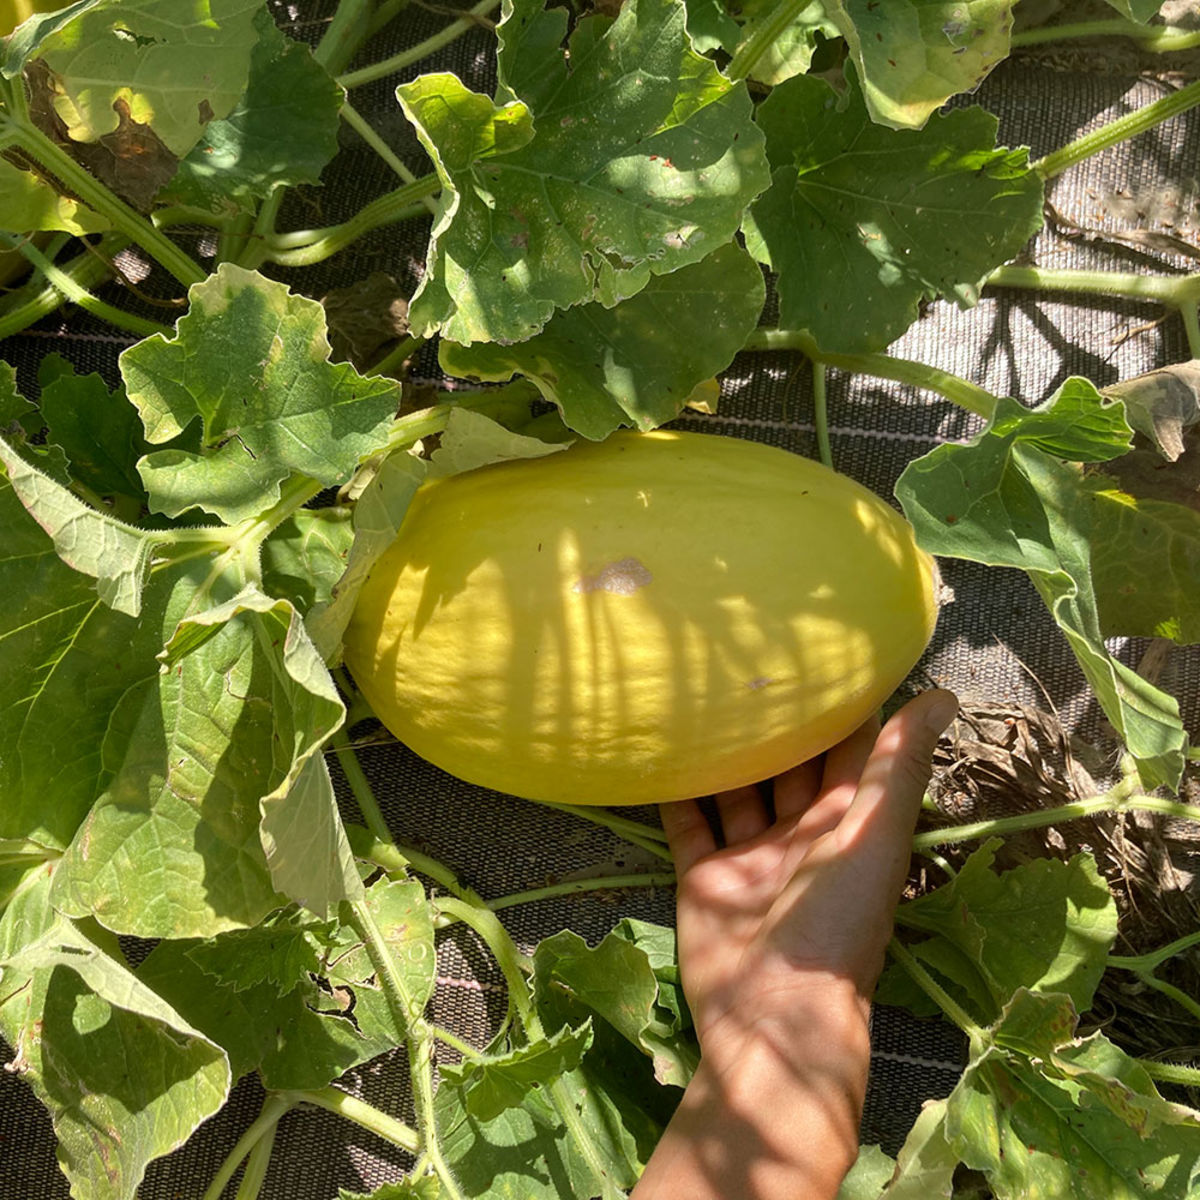 Melon Canari d'Espagne (environ 1 kg)